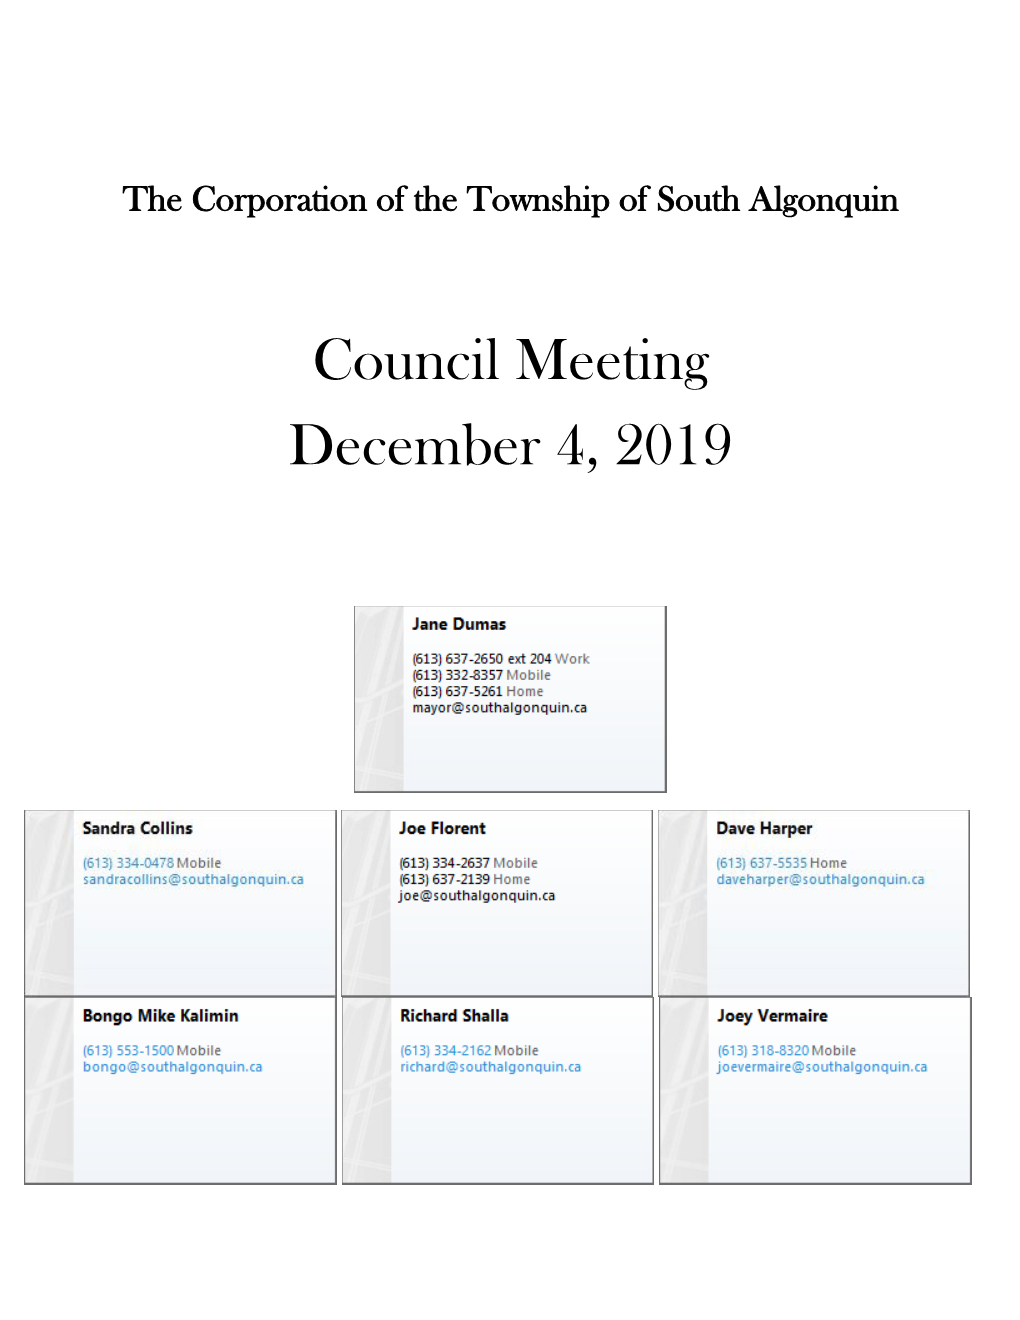 Council Meeting December 4, 2019